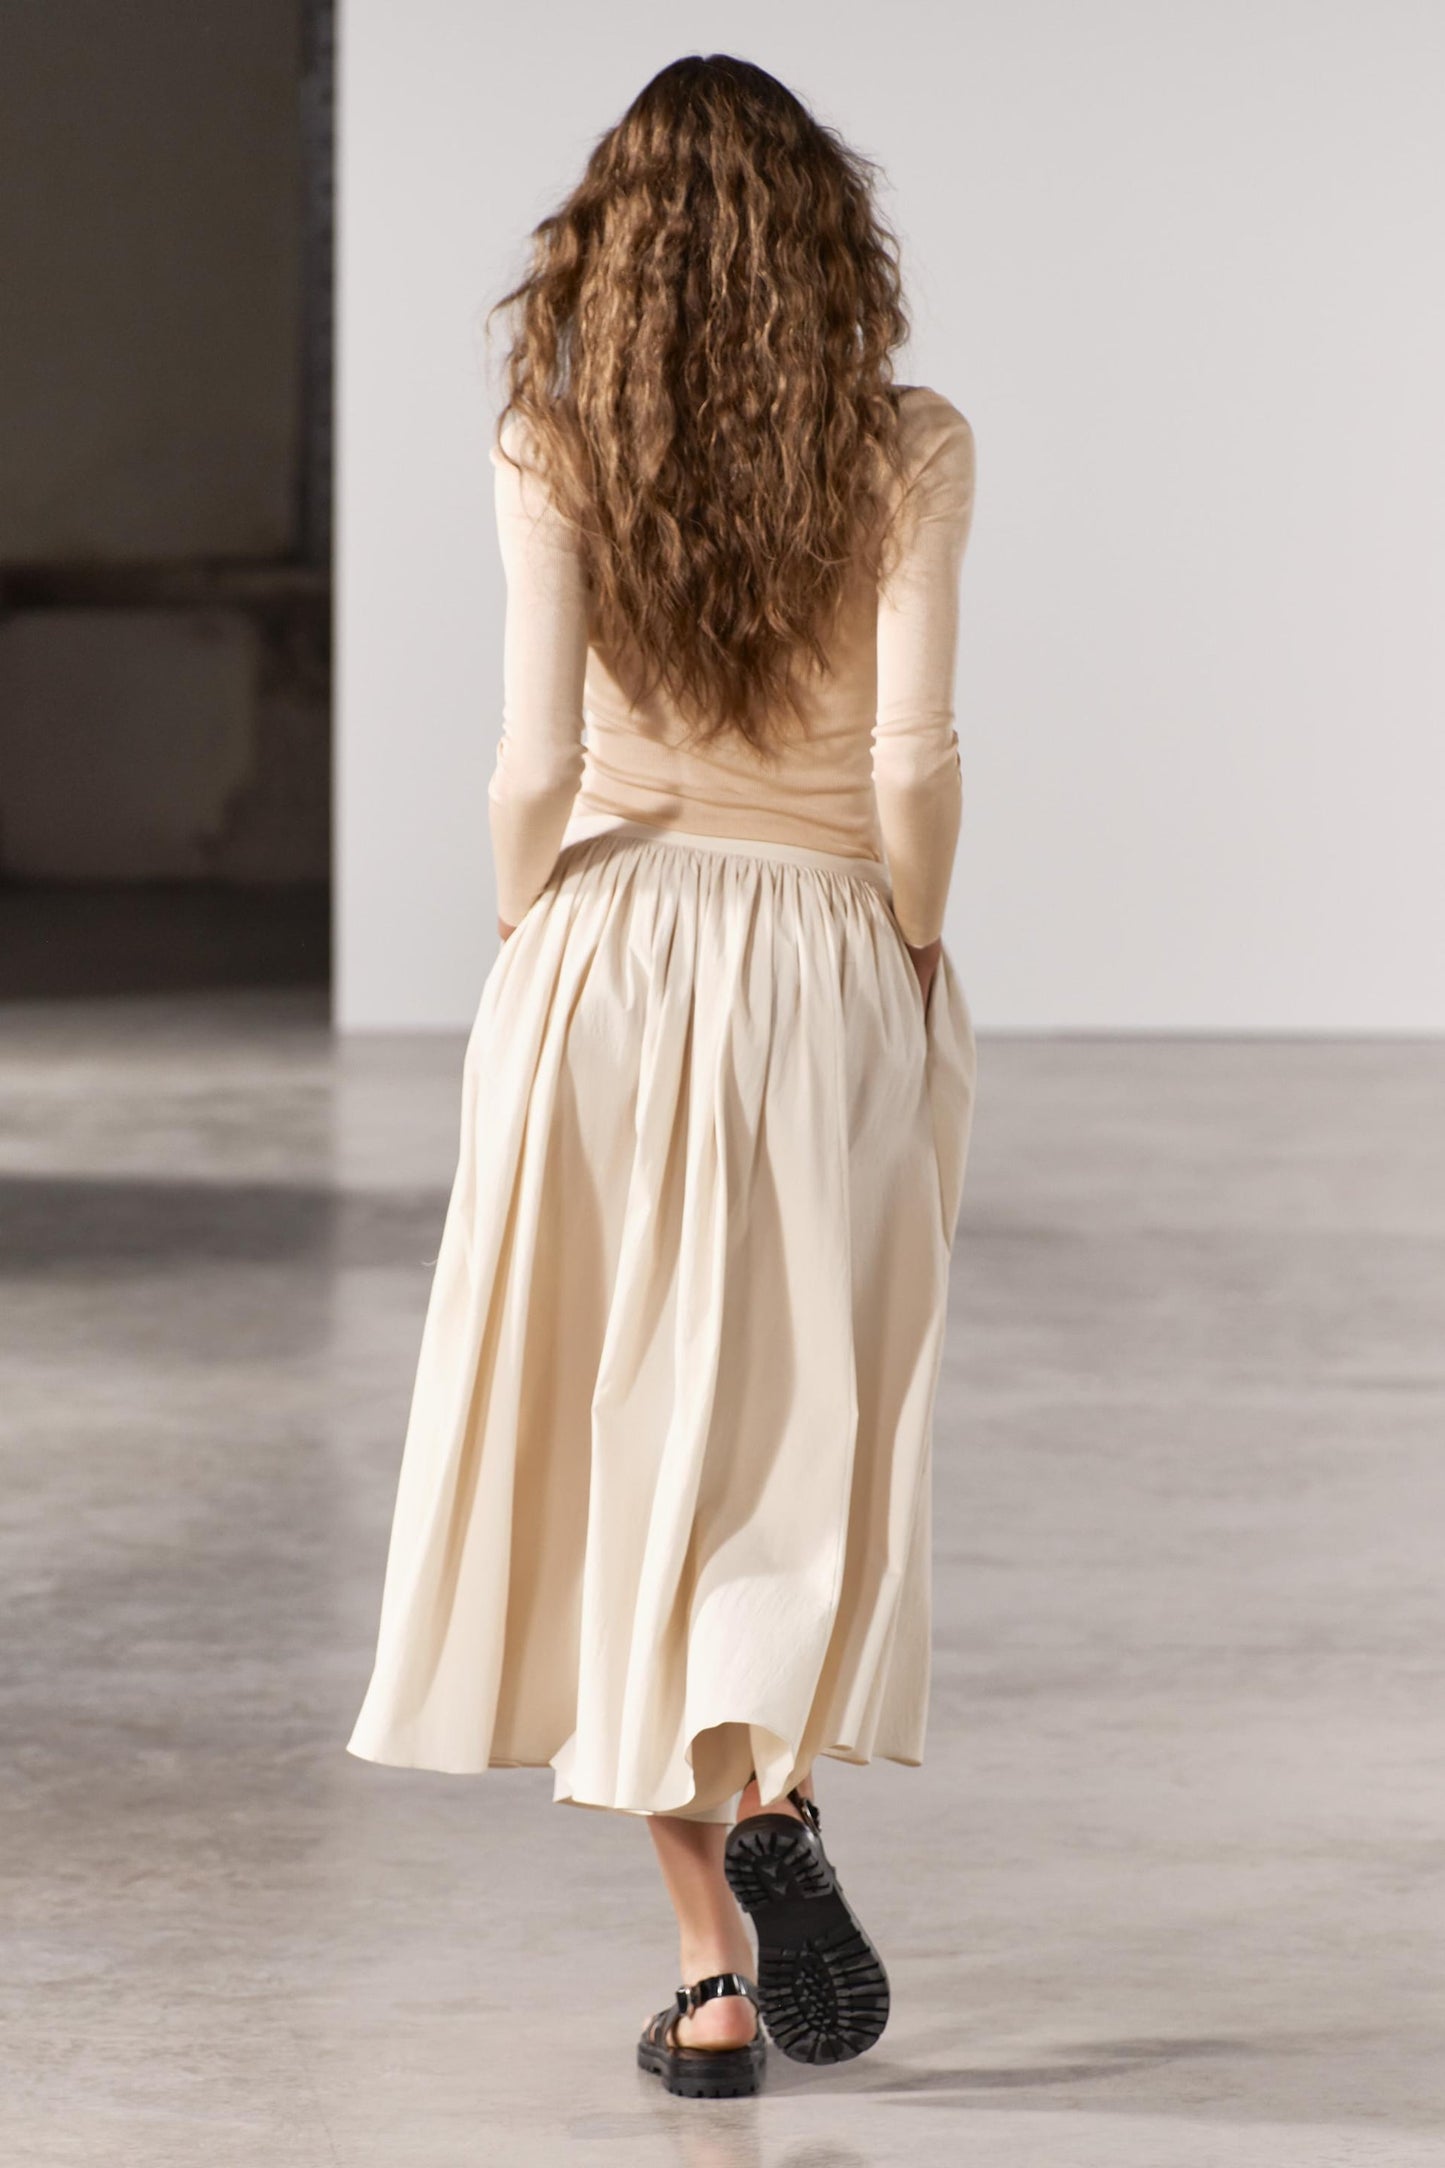 Midi skirt with scalloped waistband